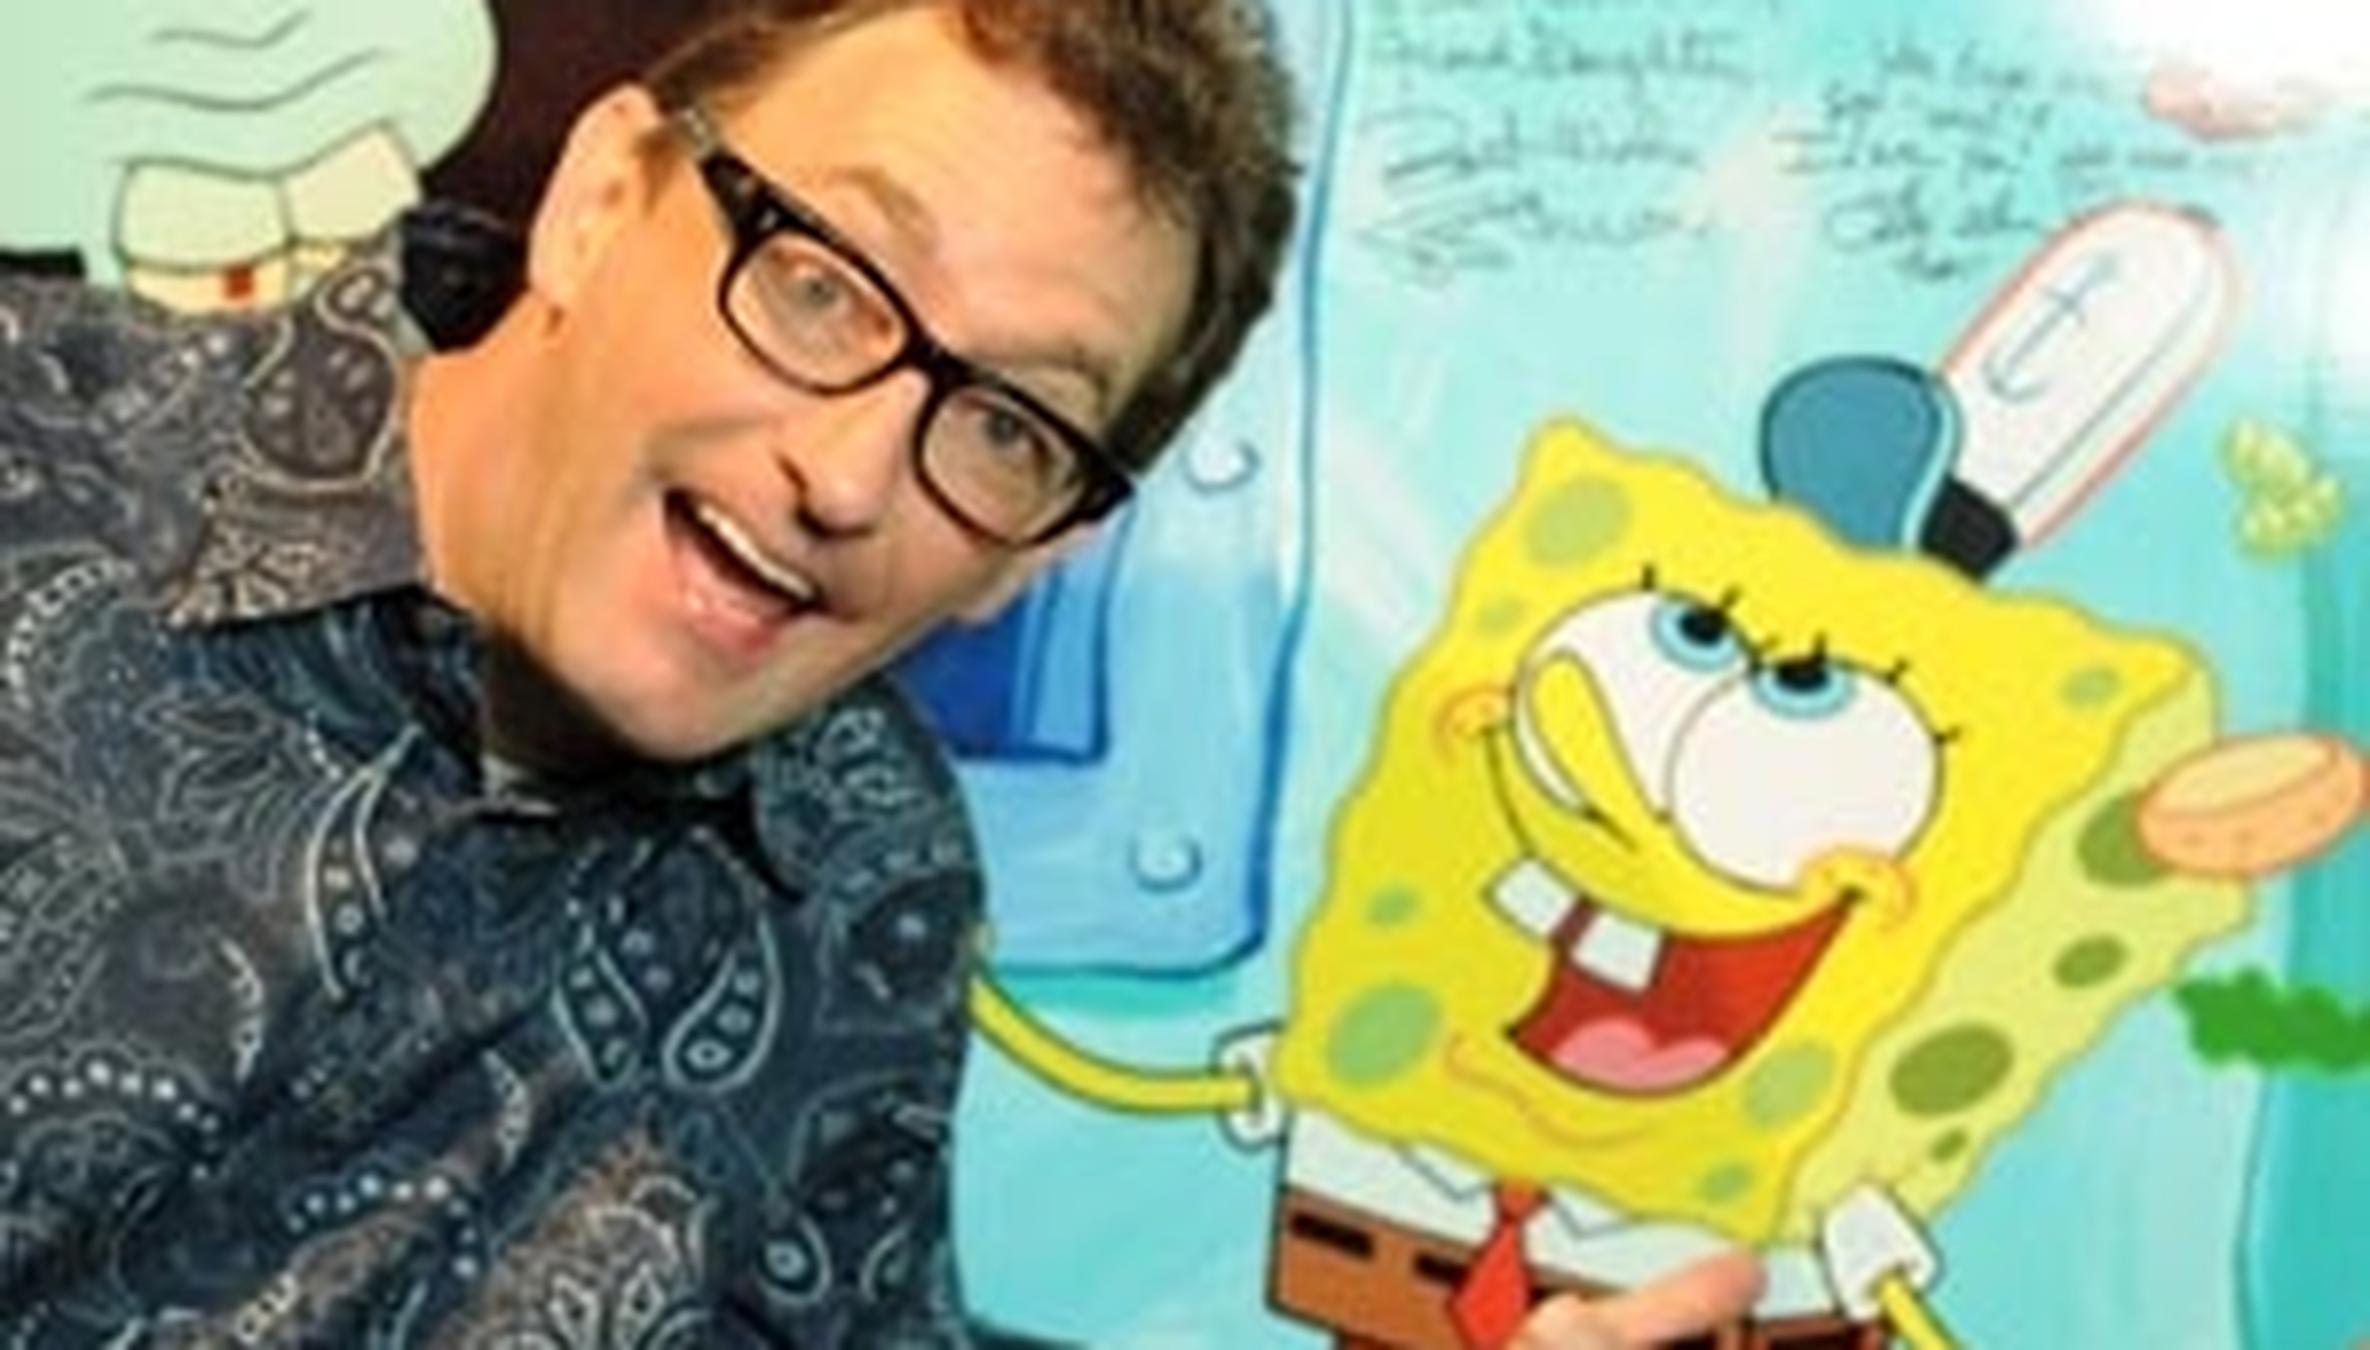 spongebob squarepants voice actors